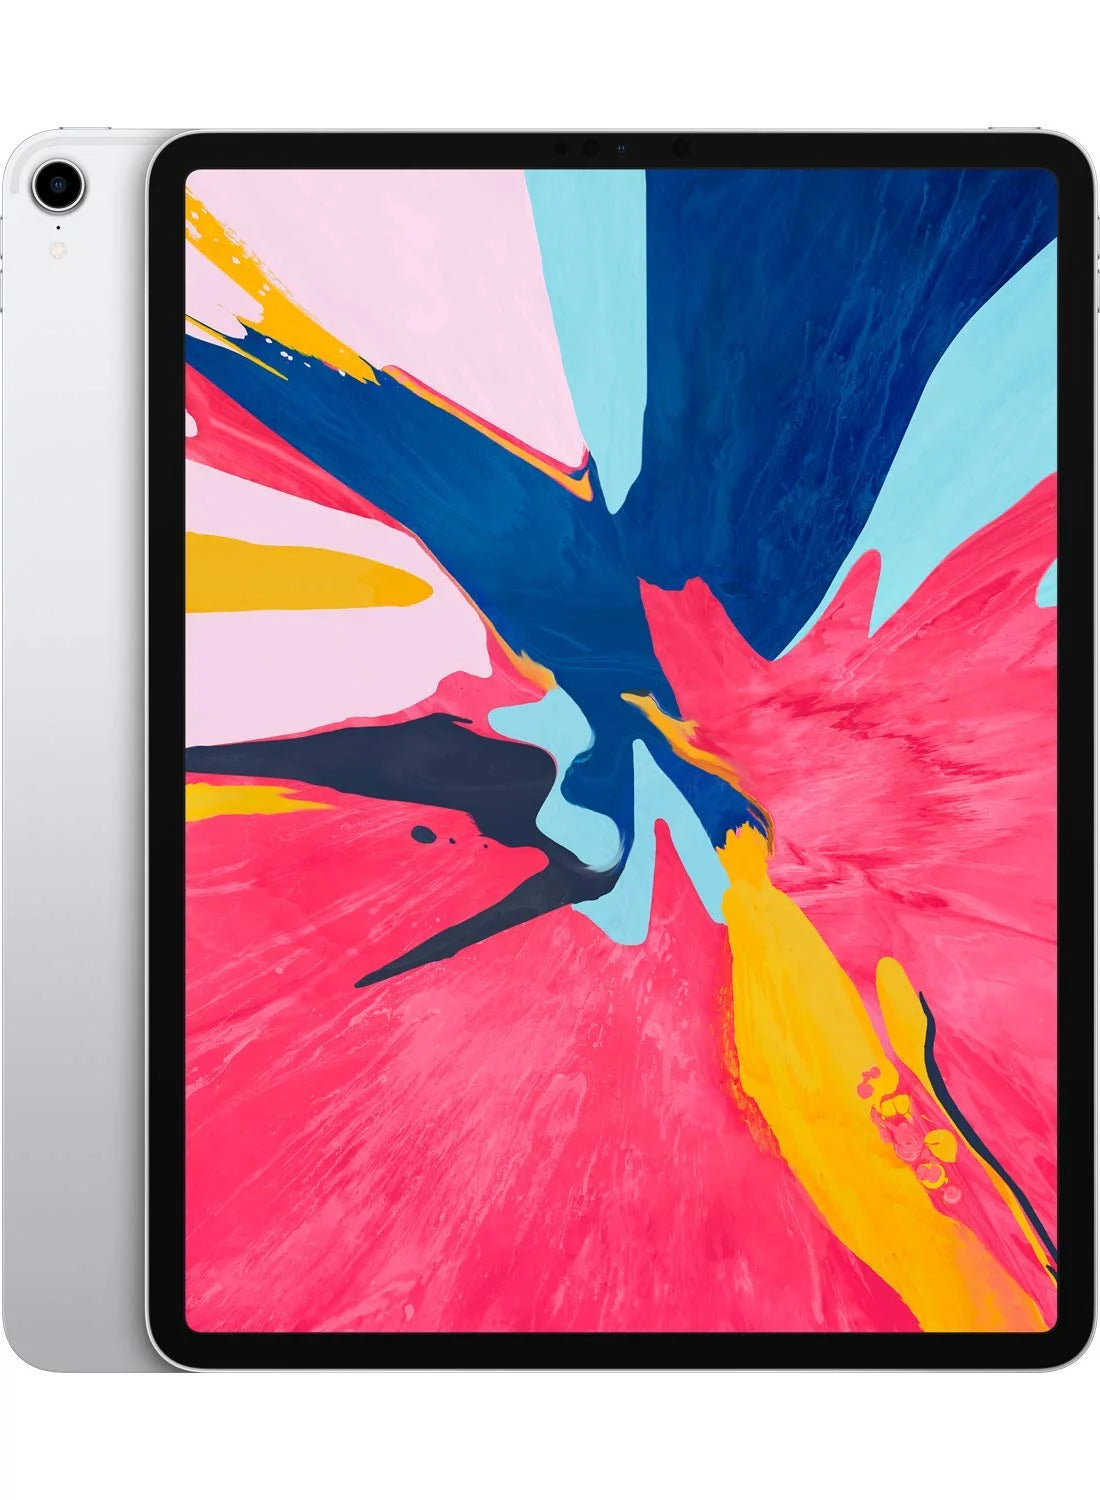 Apple iPad Pro 12.9-inch (2018 3rd Gen.) (Wi-Fi + Cellular)